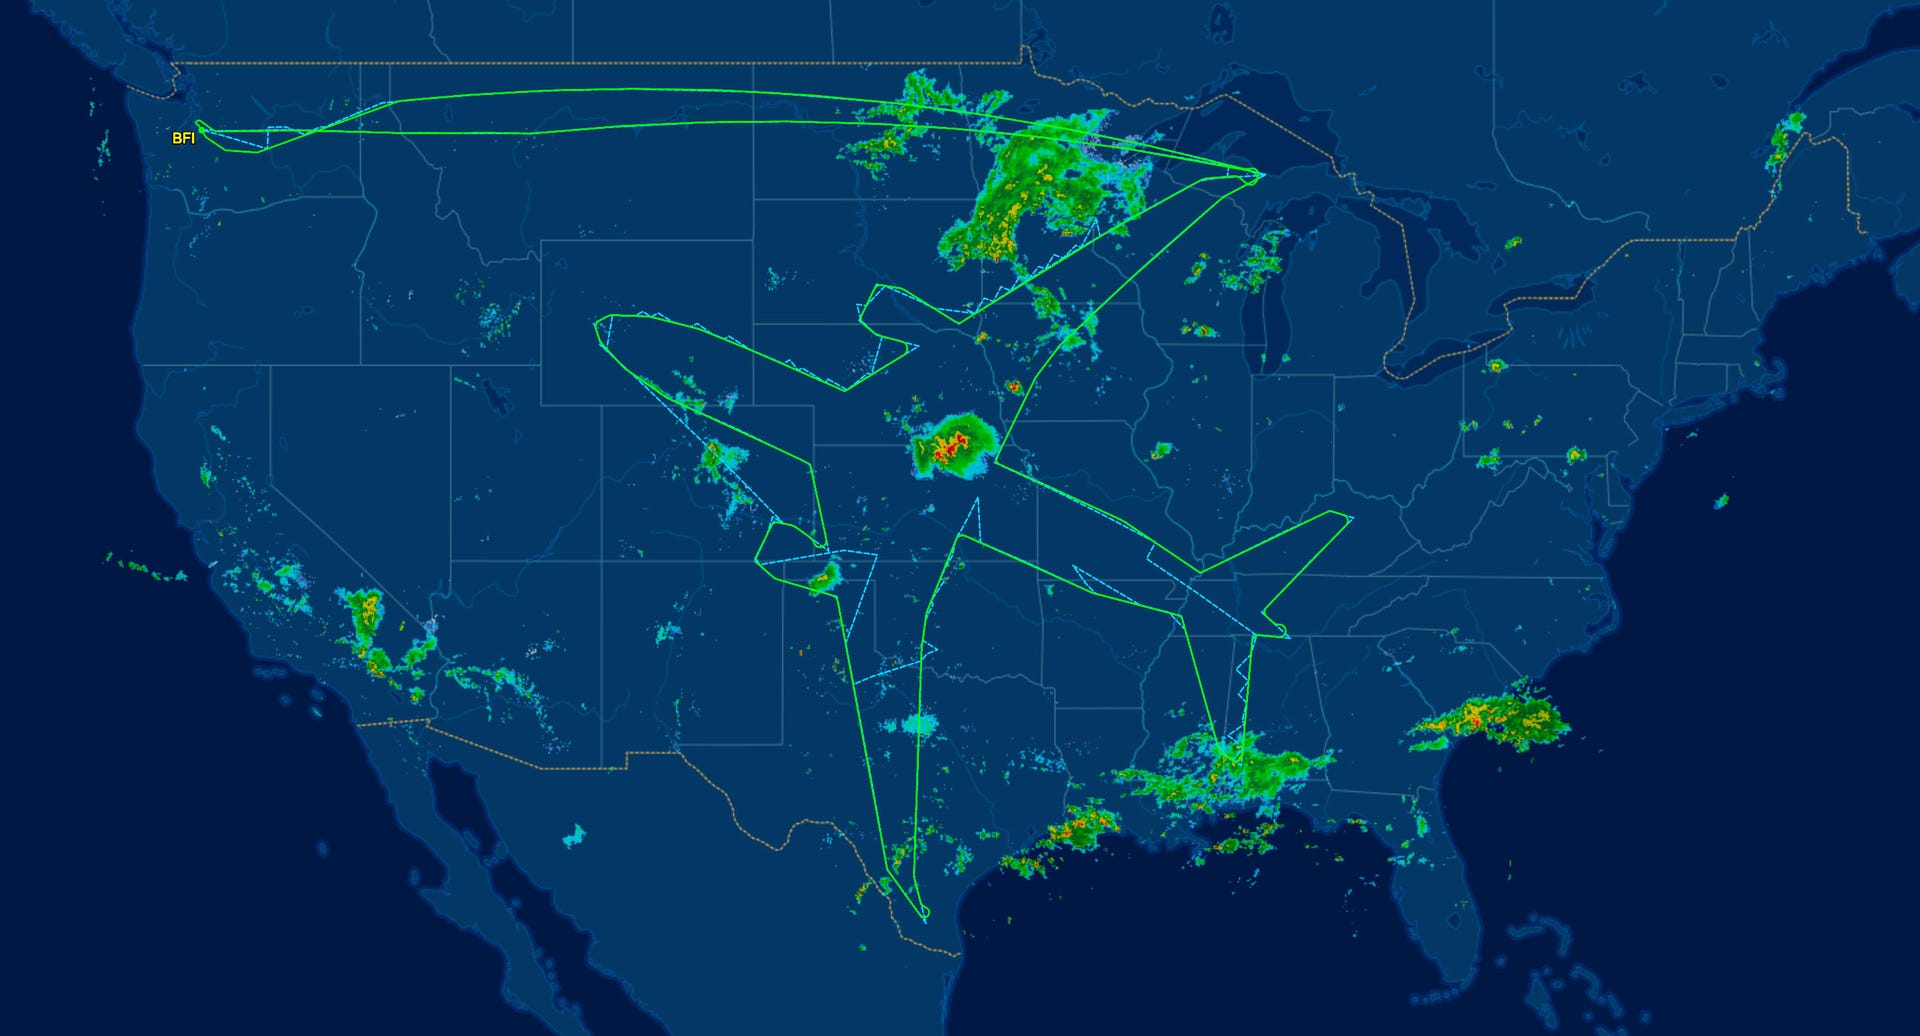 A Boeing Dreamliner jet's flight path drew the plane's outline.